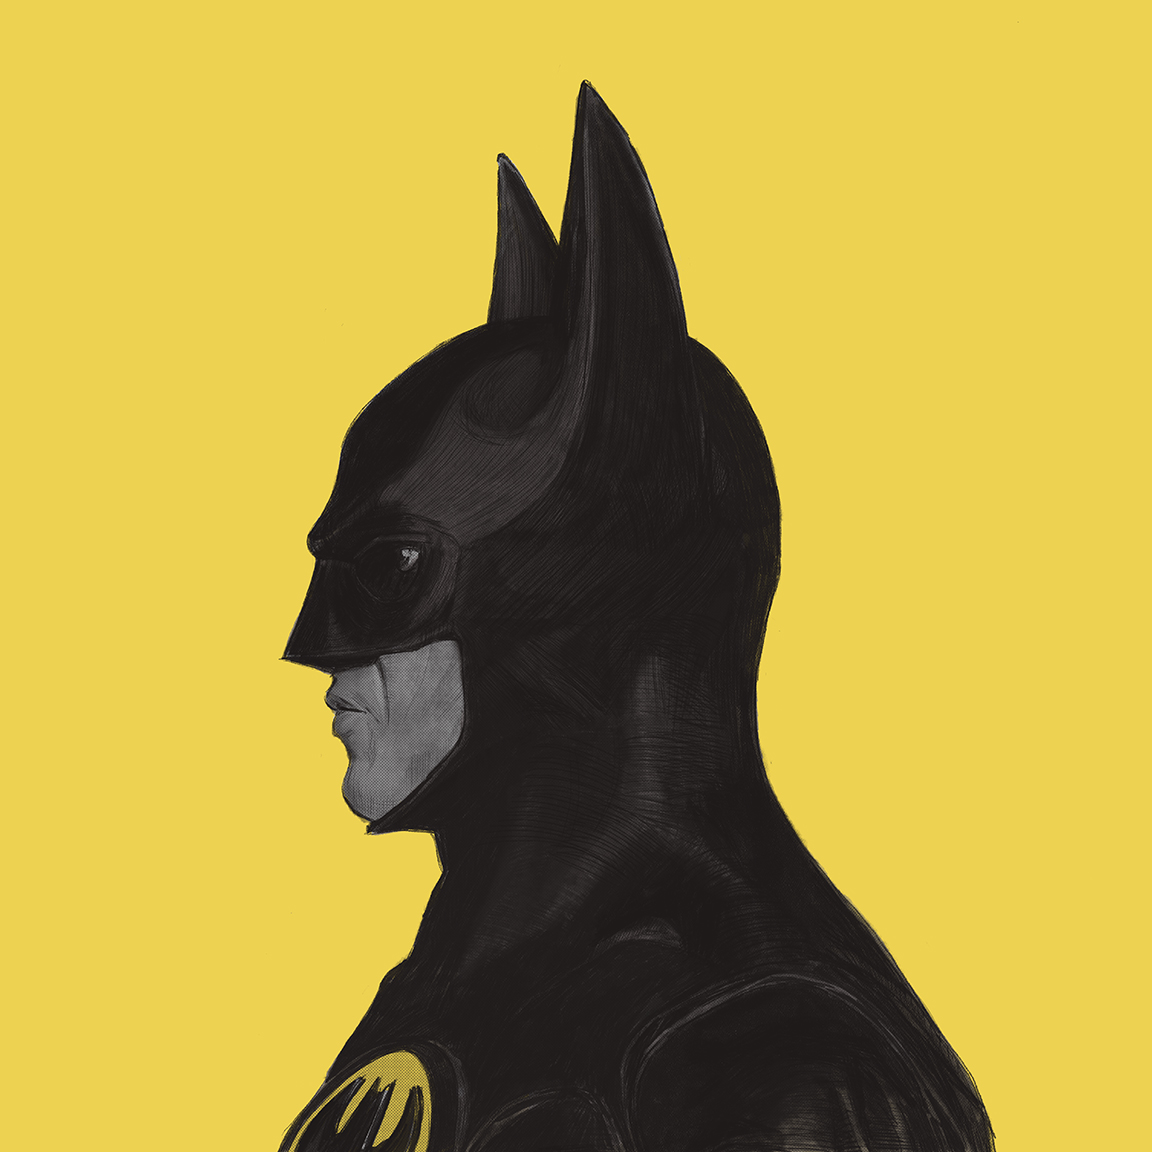 Illustration of Michael Keaton as Batman